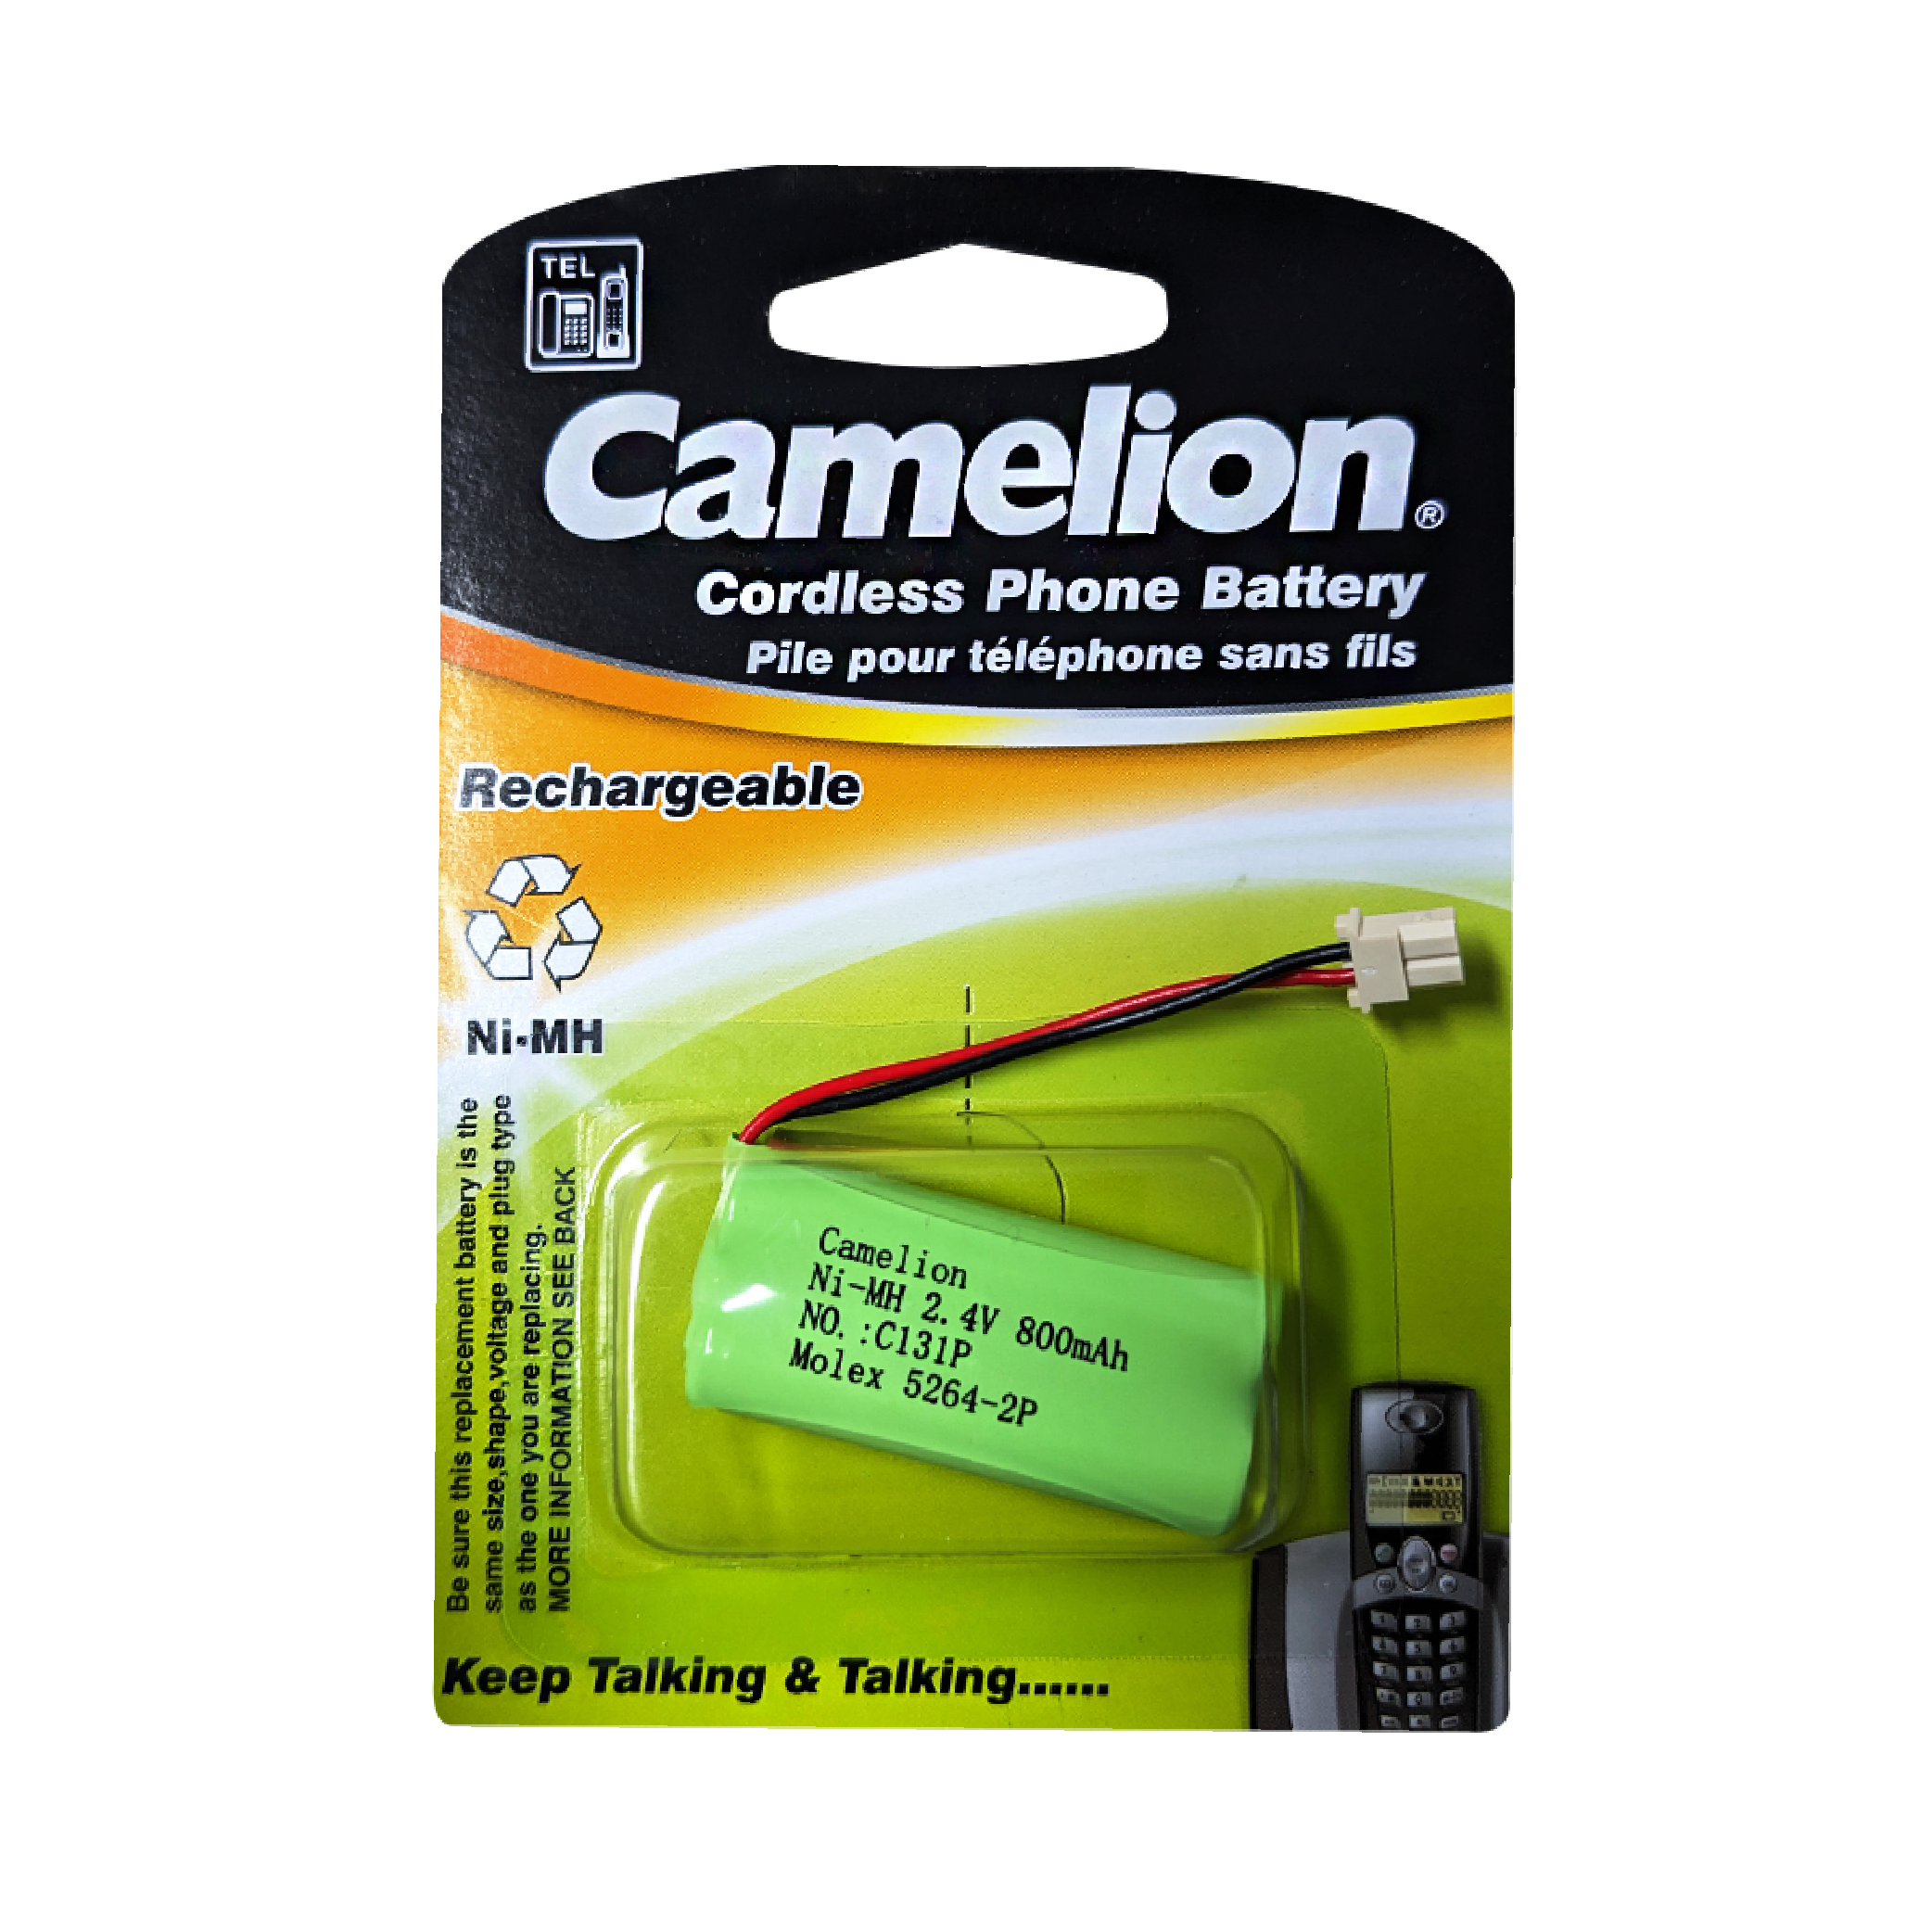 Camelion C131P Cordless Phone Battery